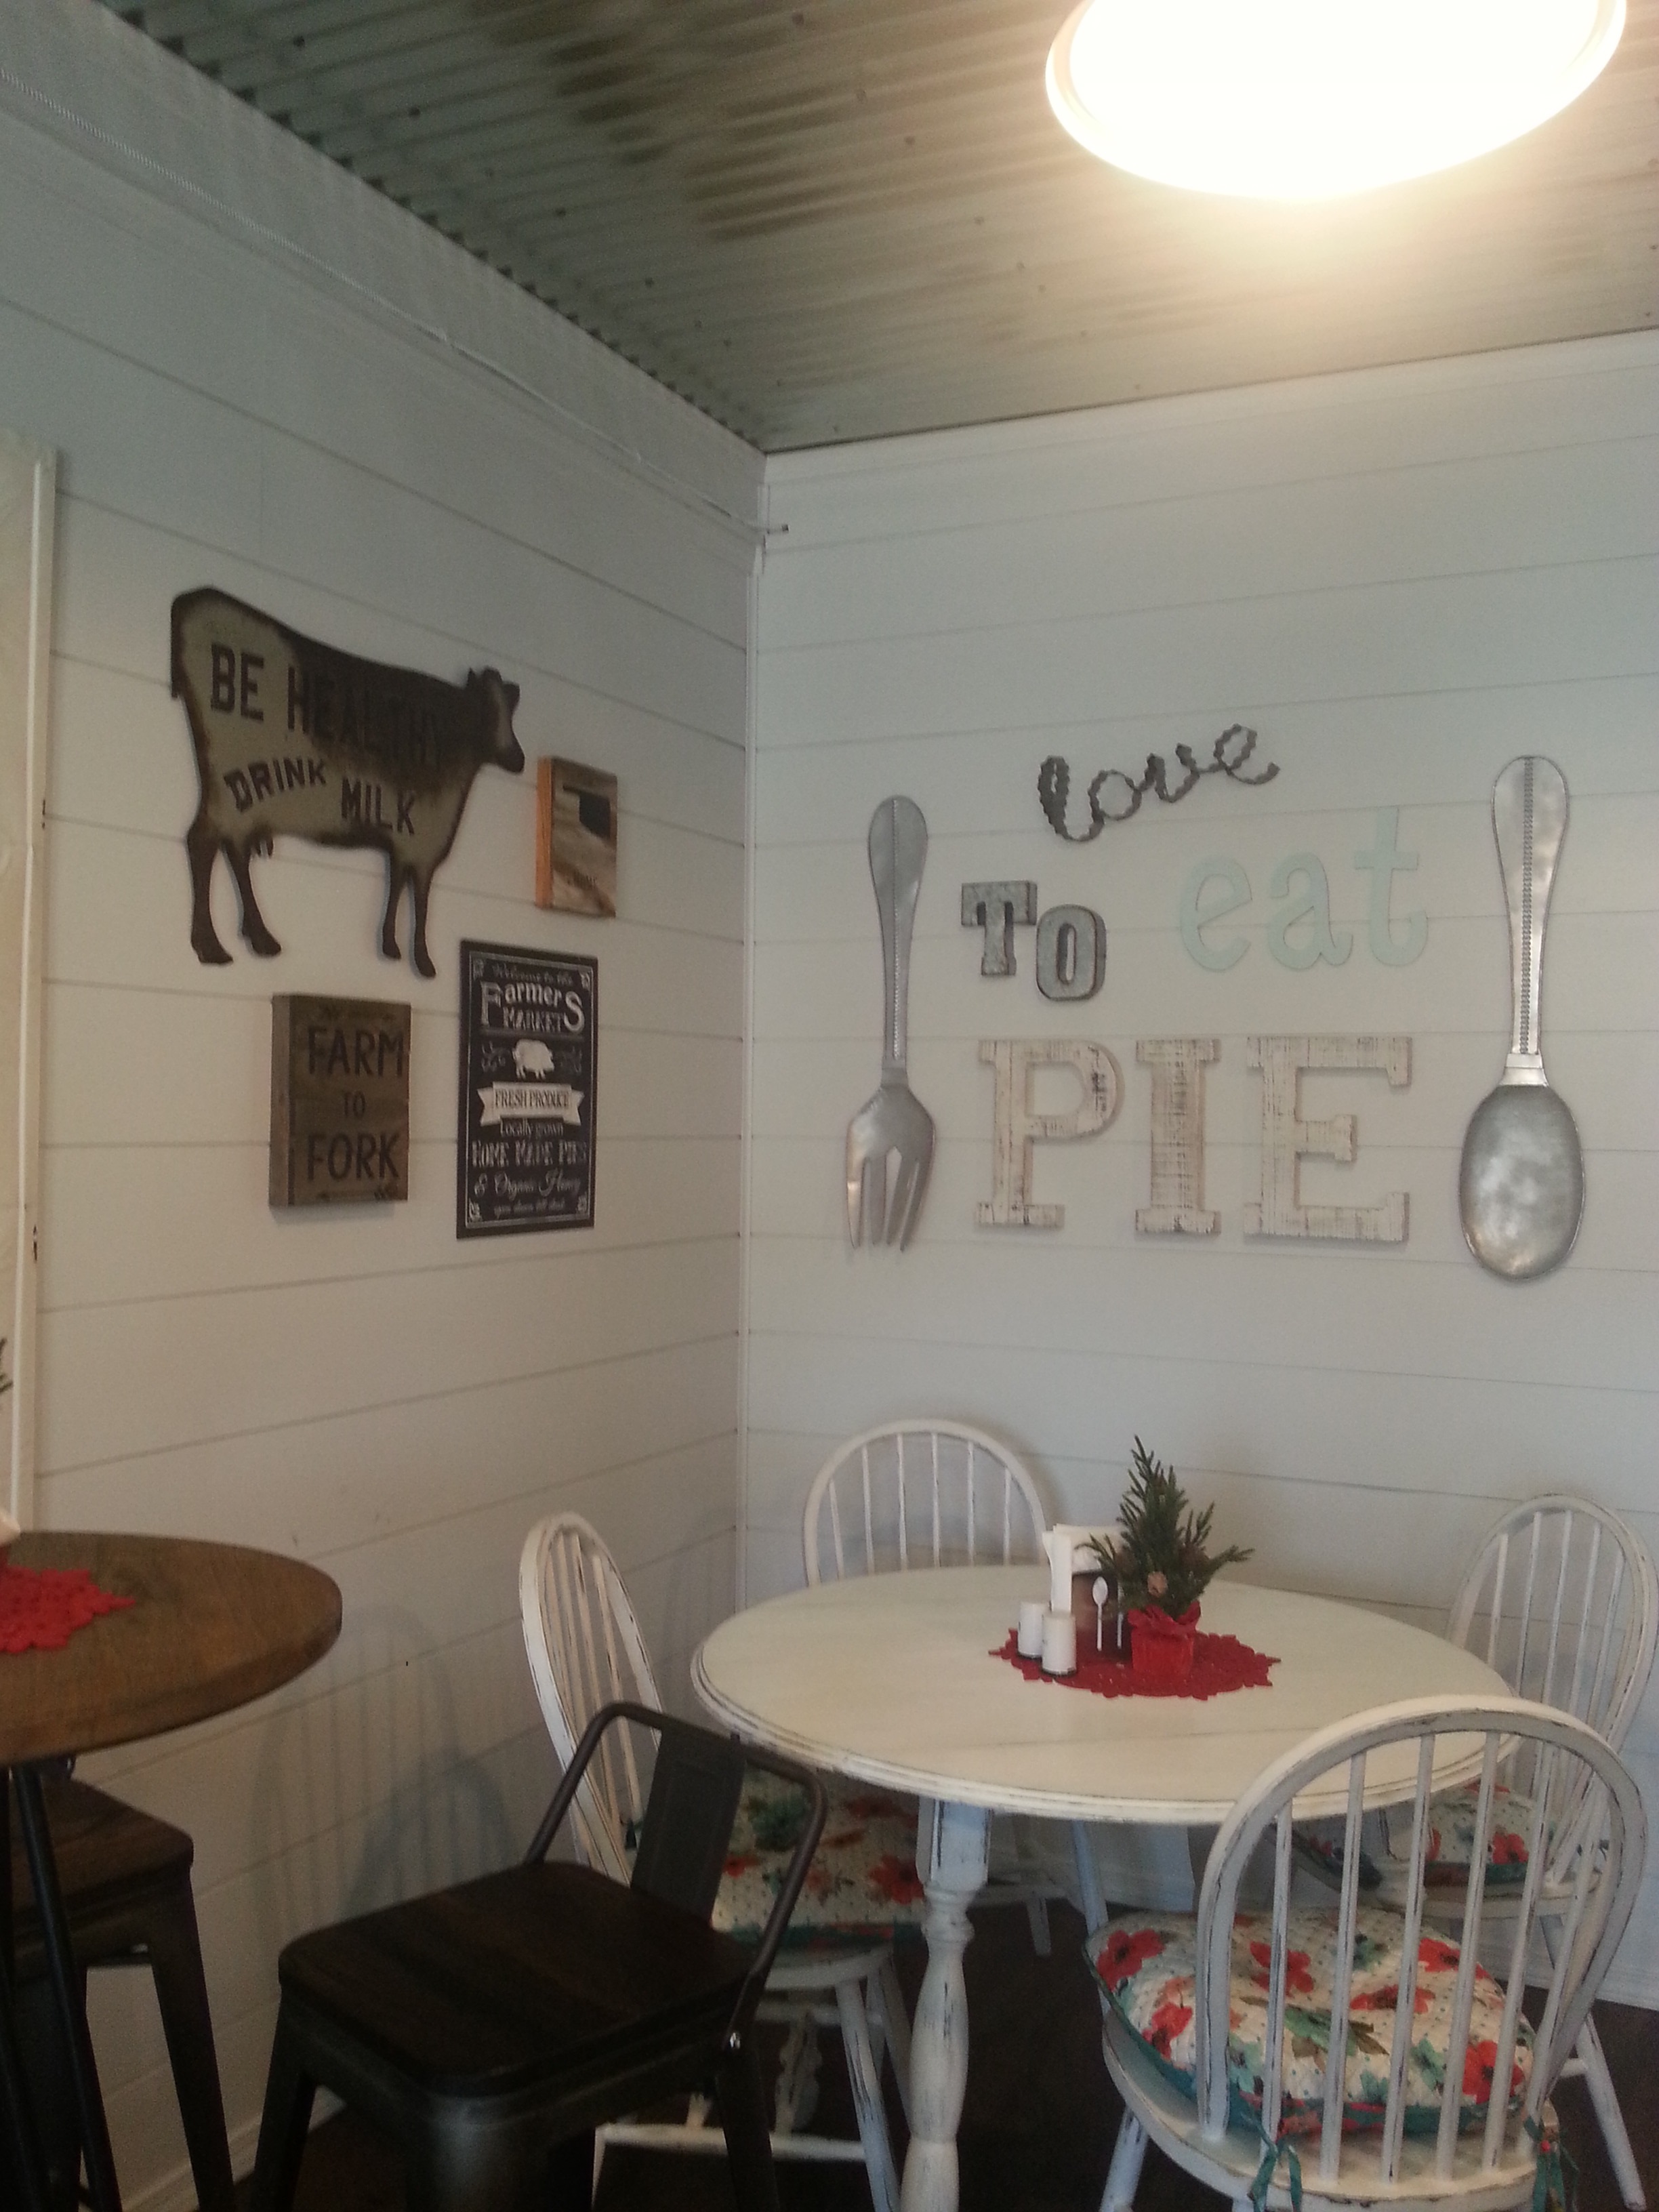 Crust and Cream Pie Co. opens